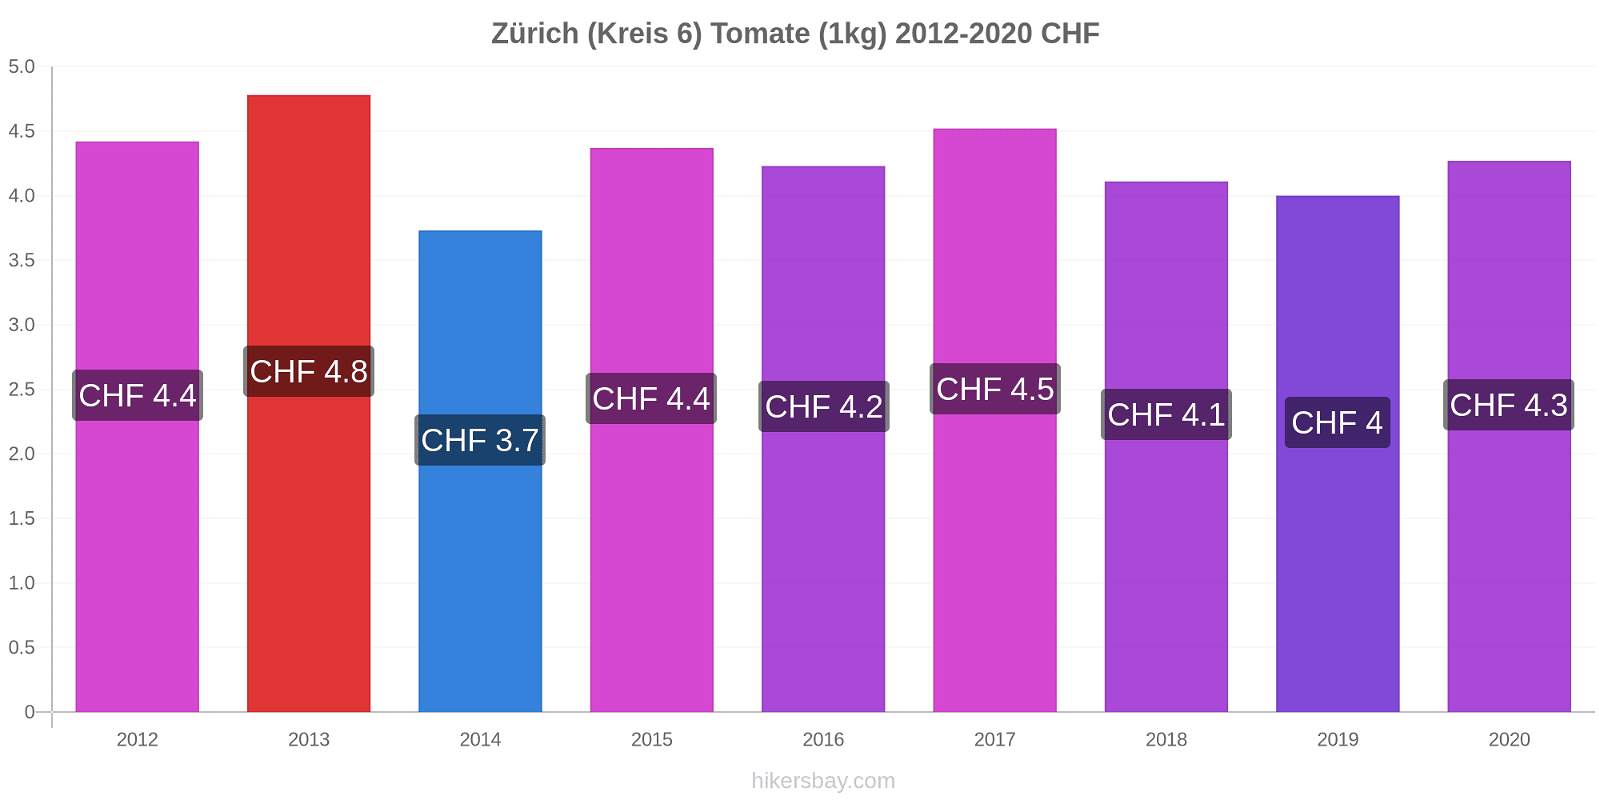 Zürich (Kreis 6) changements de prix Tomate (1kg) hikersbay.com